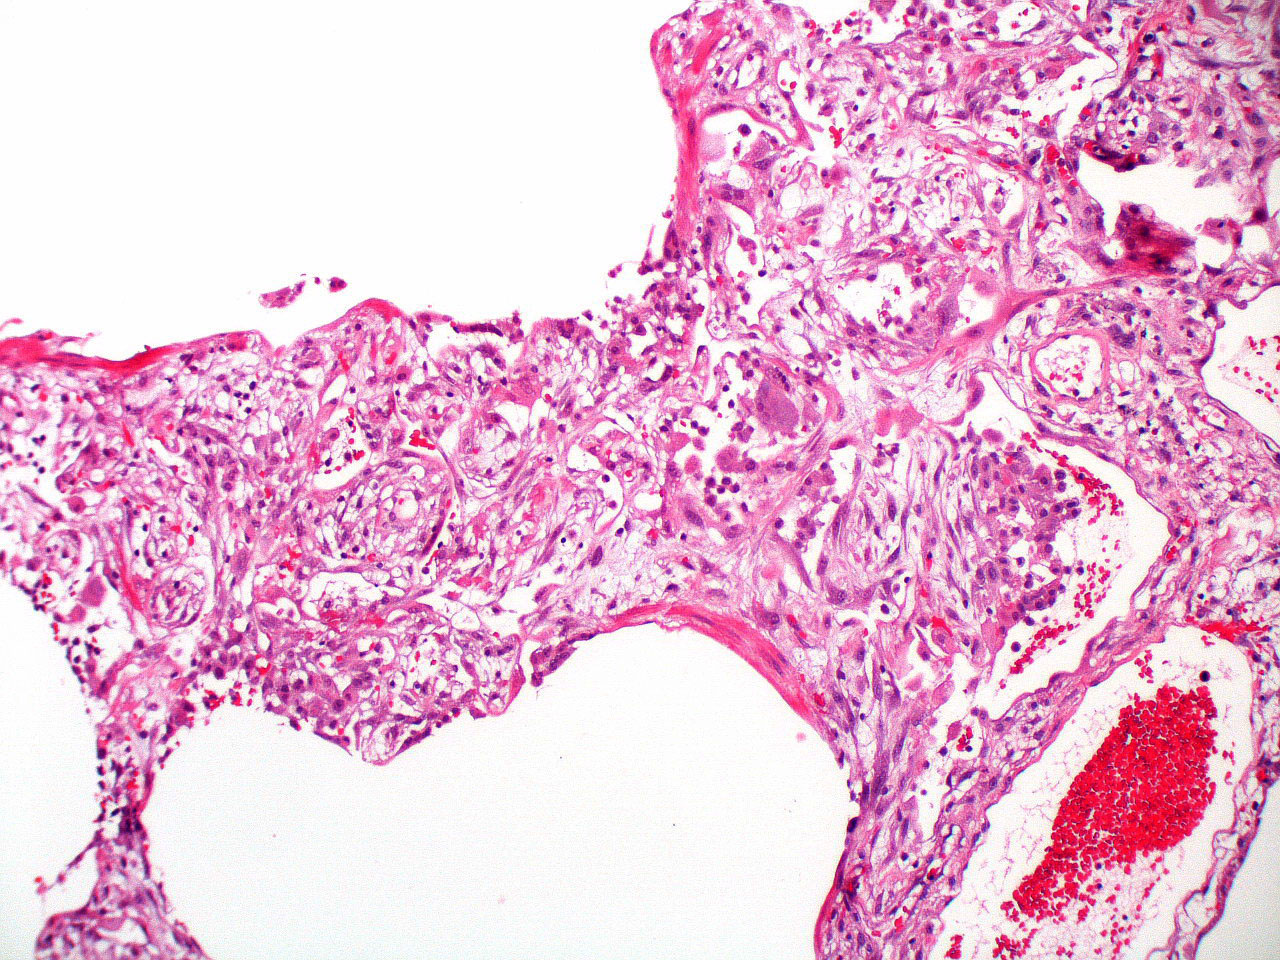 Fibroblastic proliferation